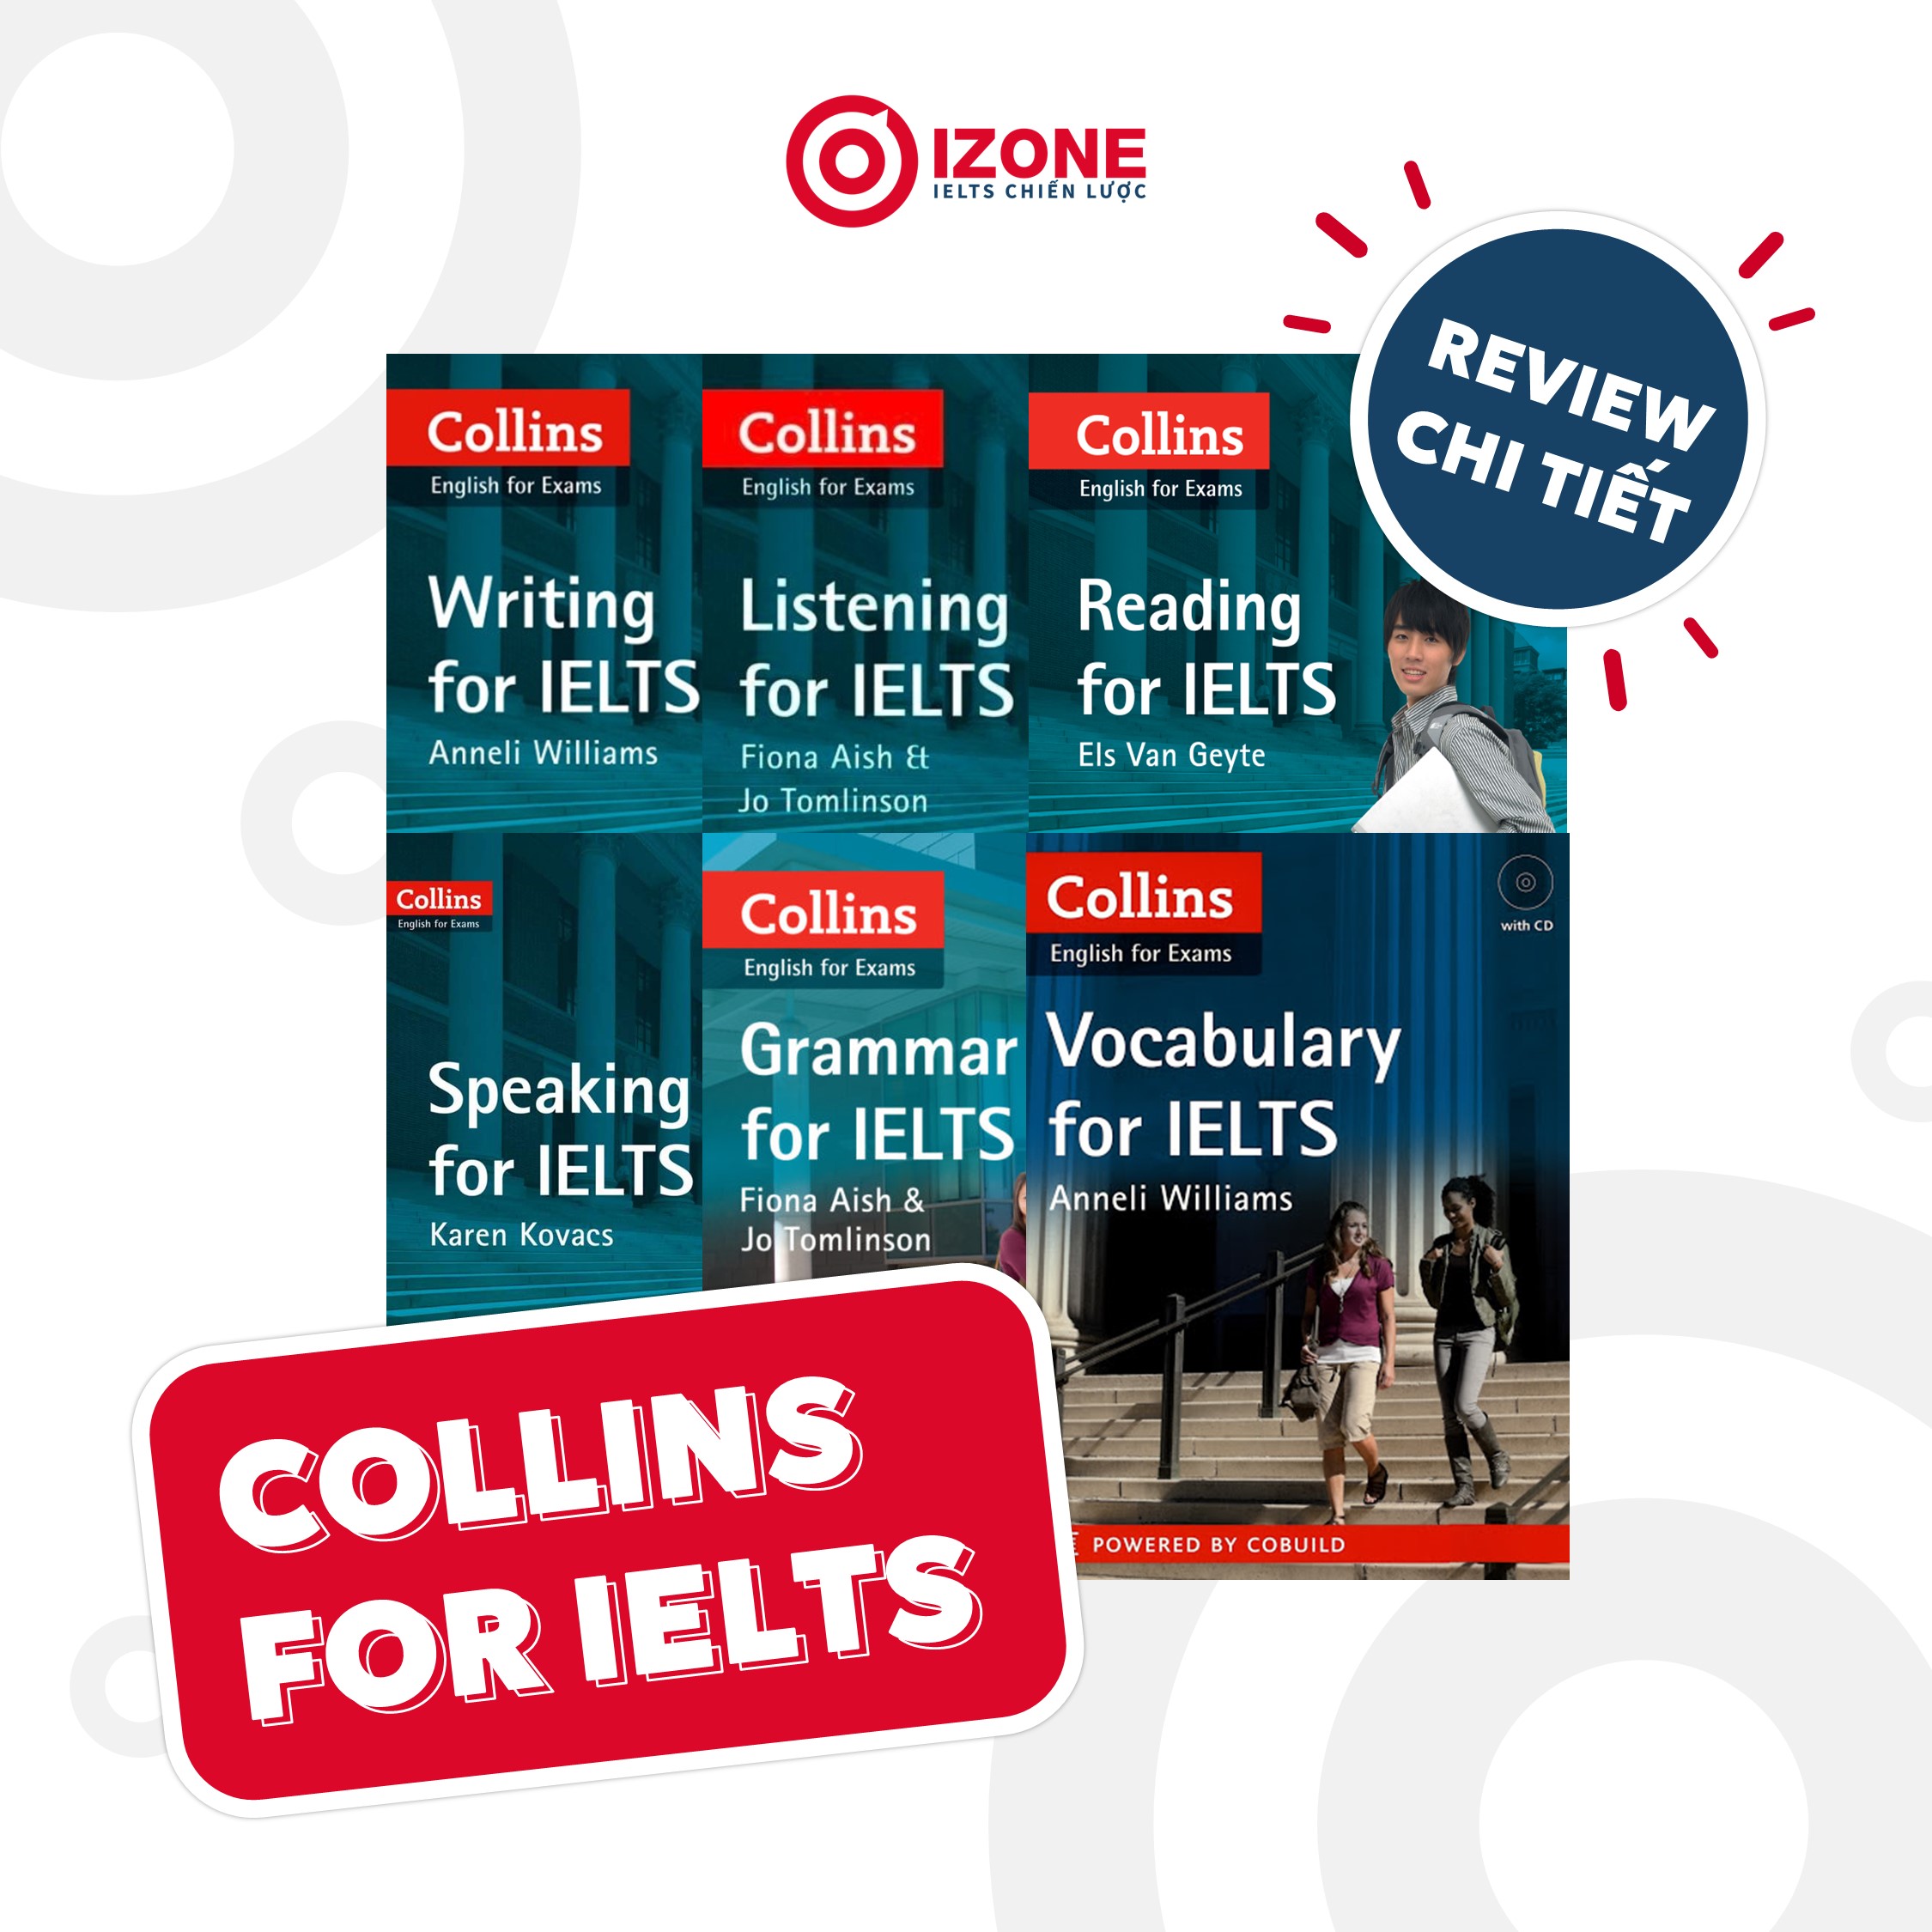 Review Chi Tiết Bộ Sách IELTS Của Collins – Collins For IELTS